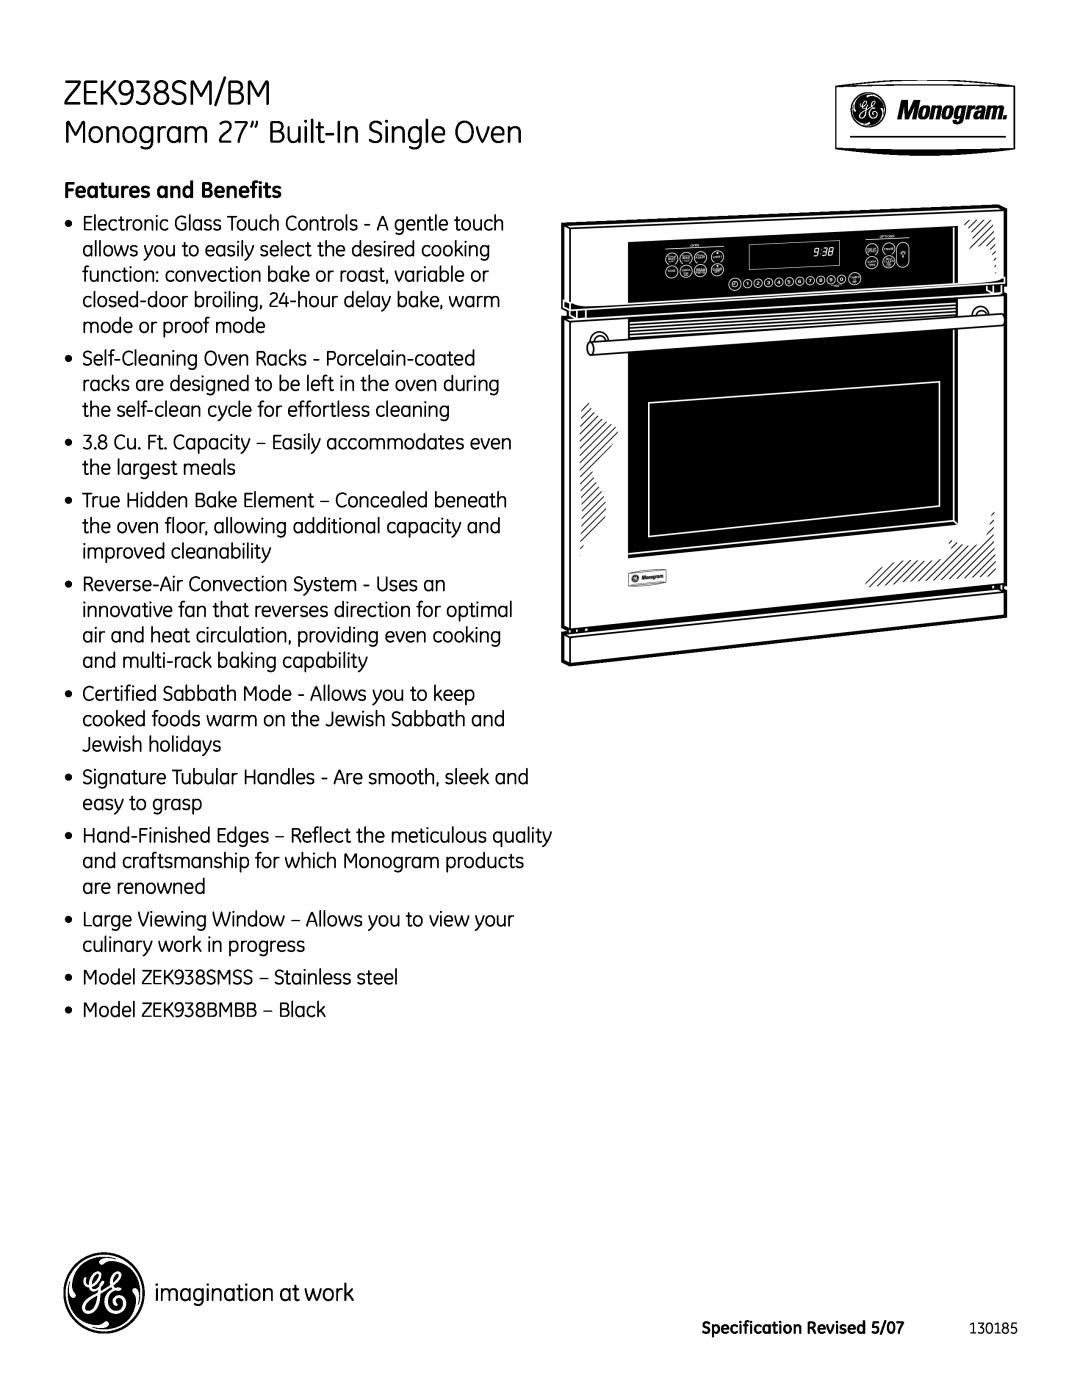 GE ZEK938SM/BM installation instructions Monogram 27” Built-In Single Oven, Features and Benefits 